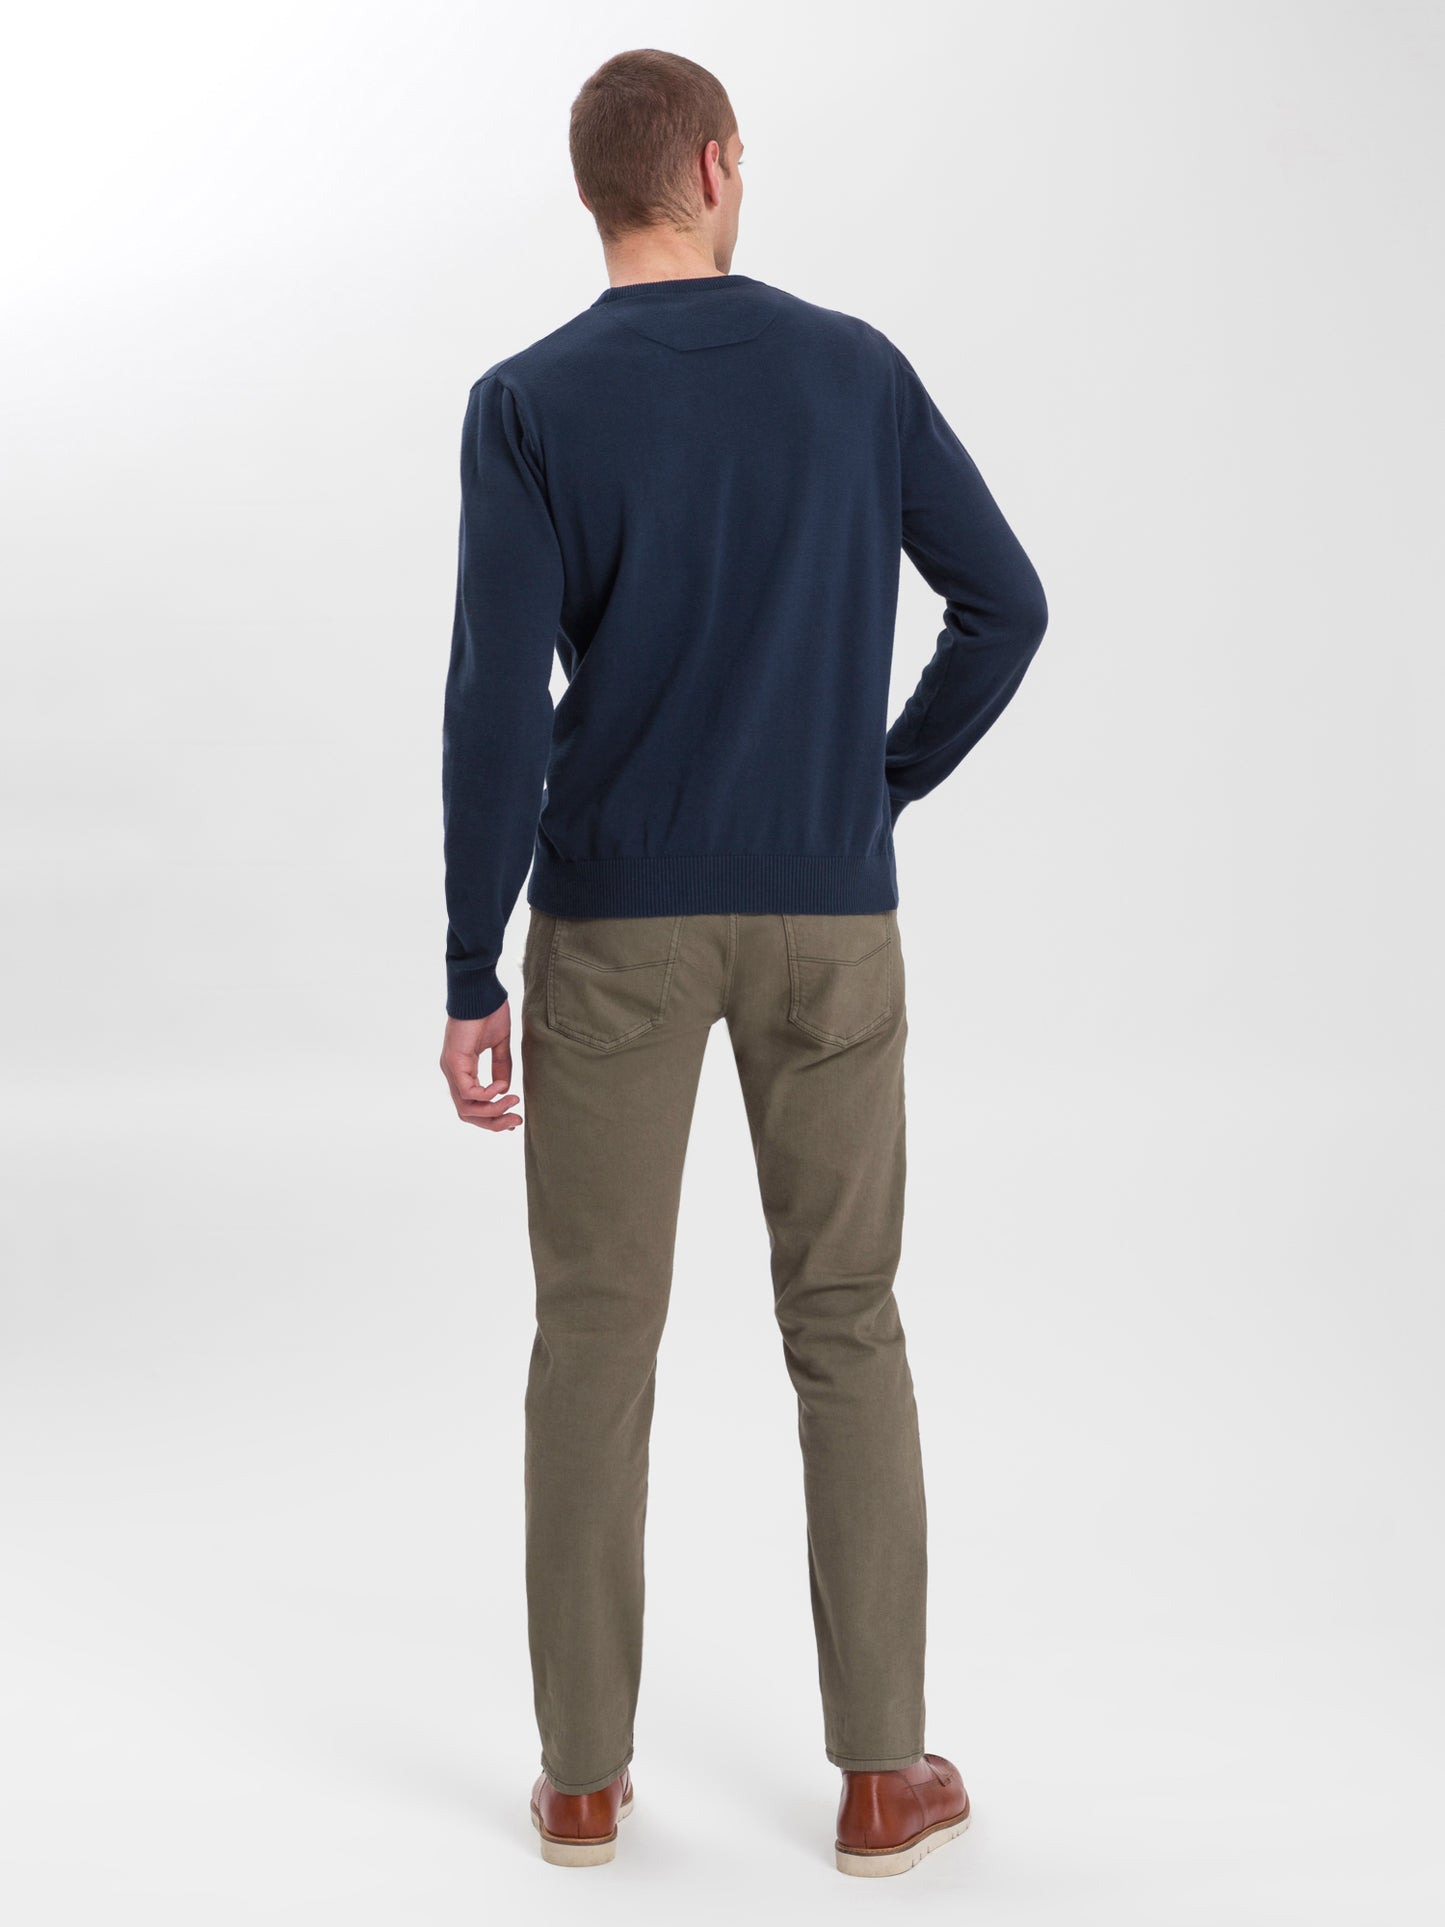 Men's regular fine knit sweater navy blue